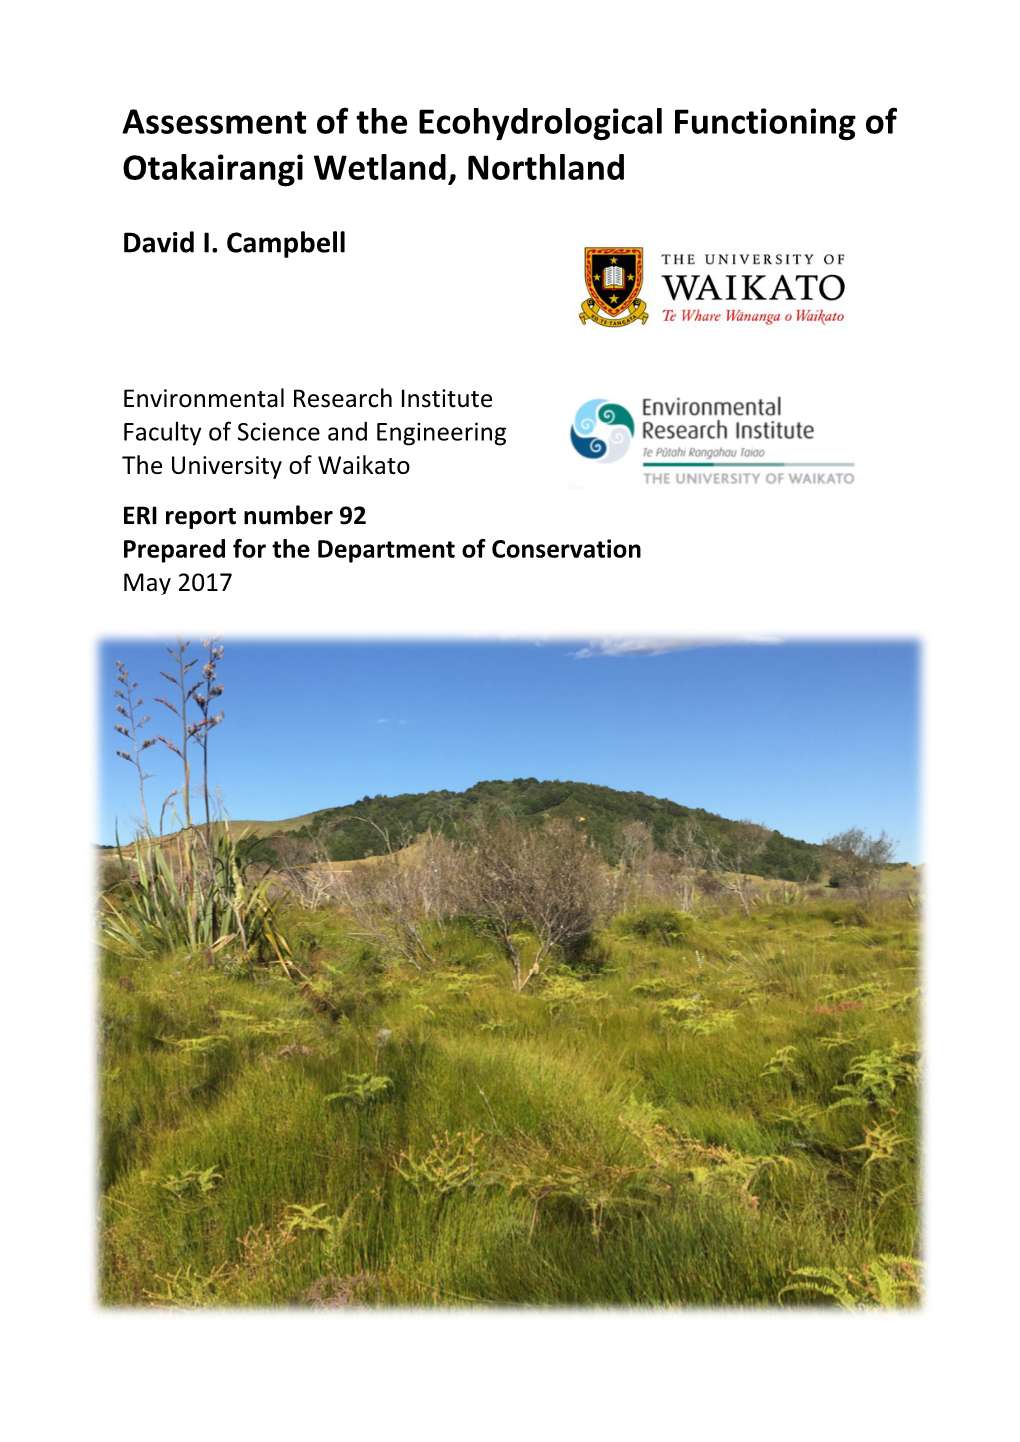 Assessment of the Ecohydrological Functioning of Otakairangi Wetland, Northland